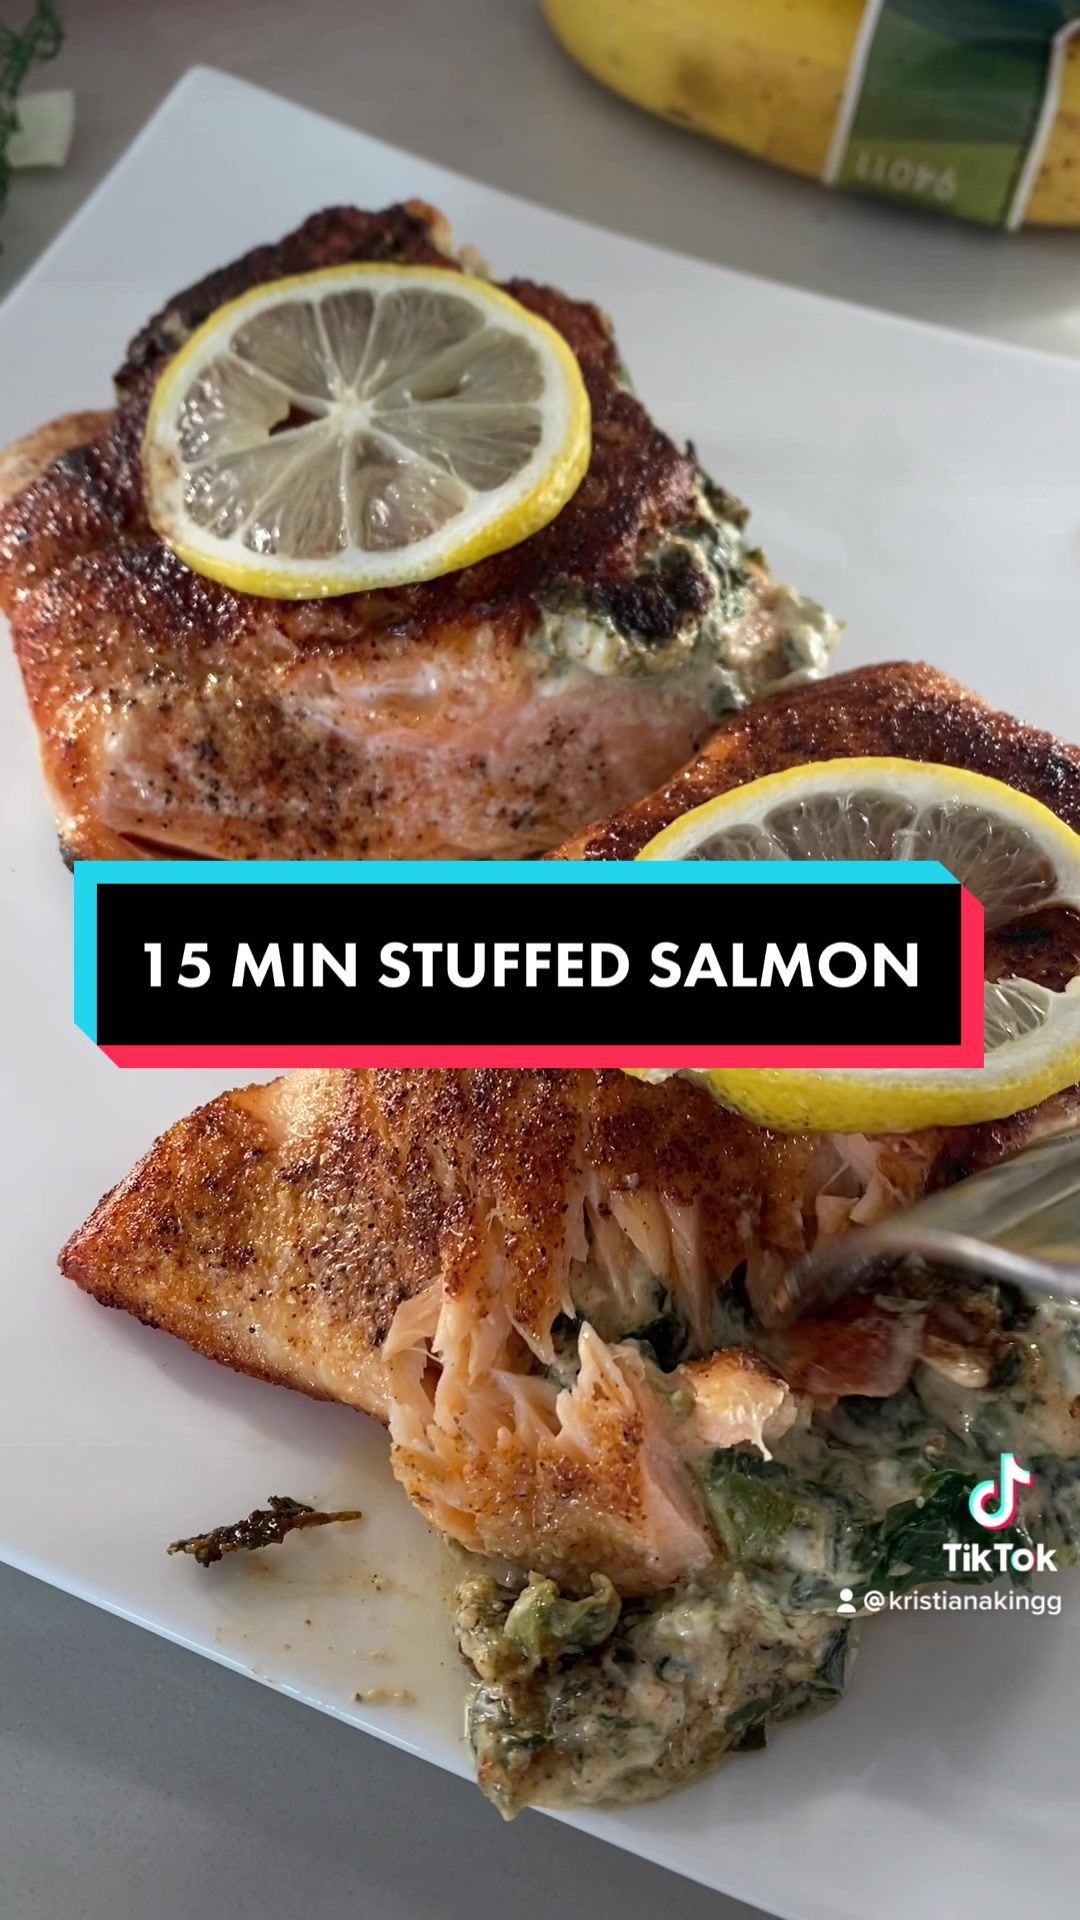 @15 MIN STUFFED SALMON #salmon #stuffedsalmon #quickrecipes #...